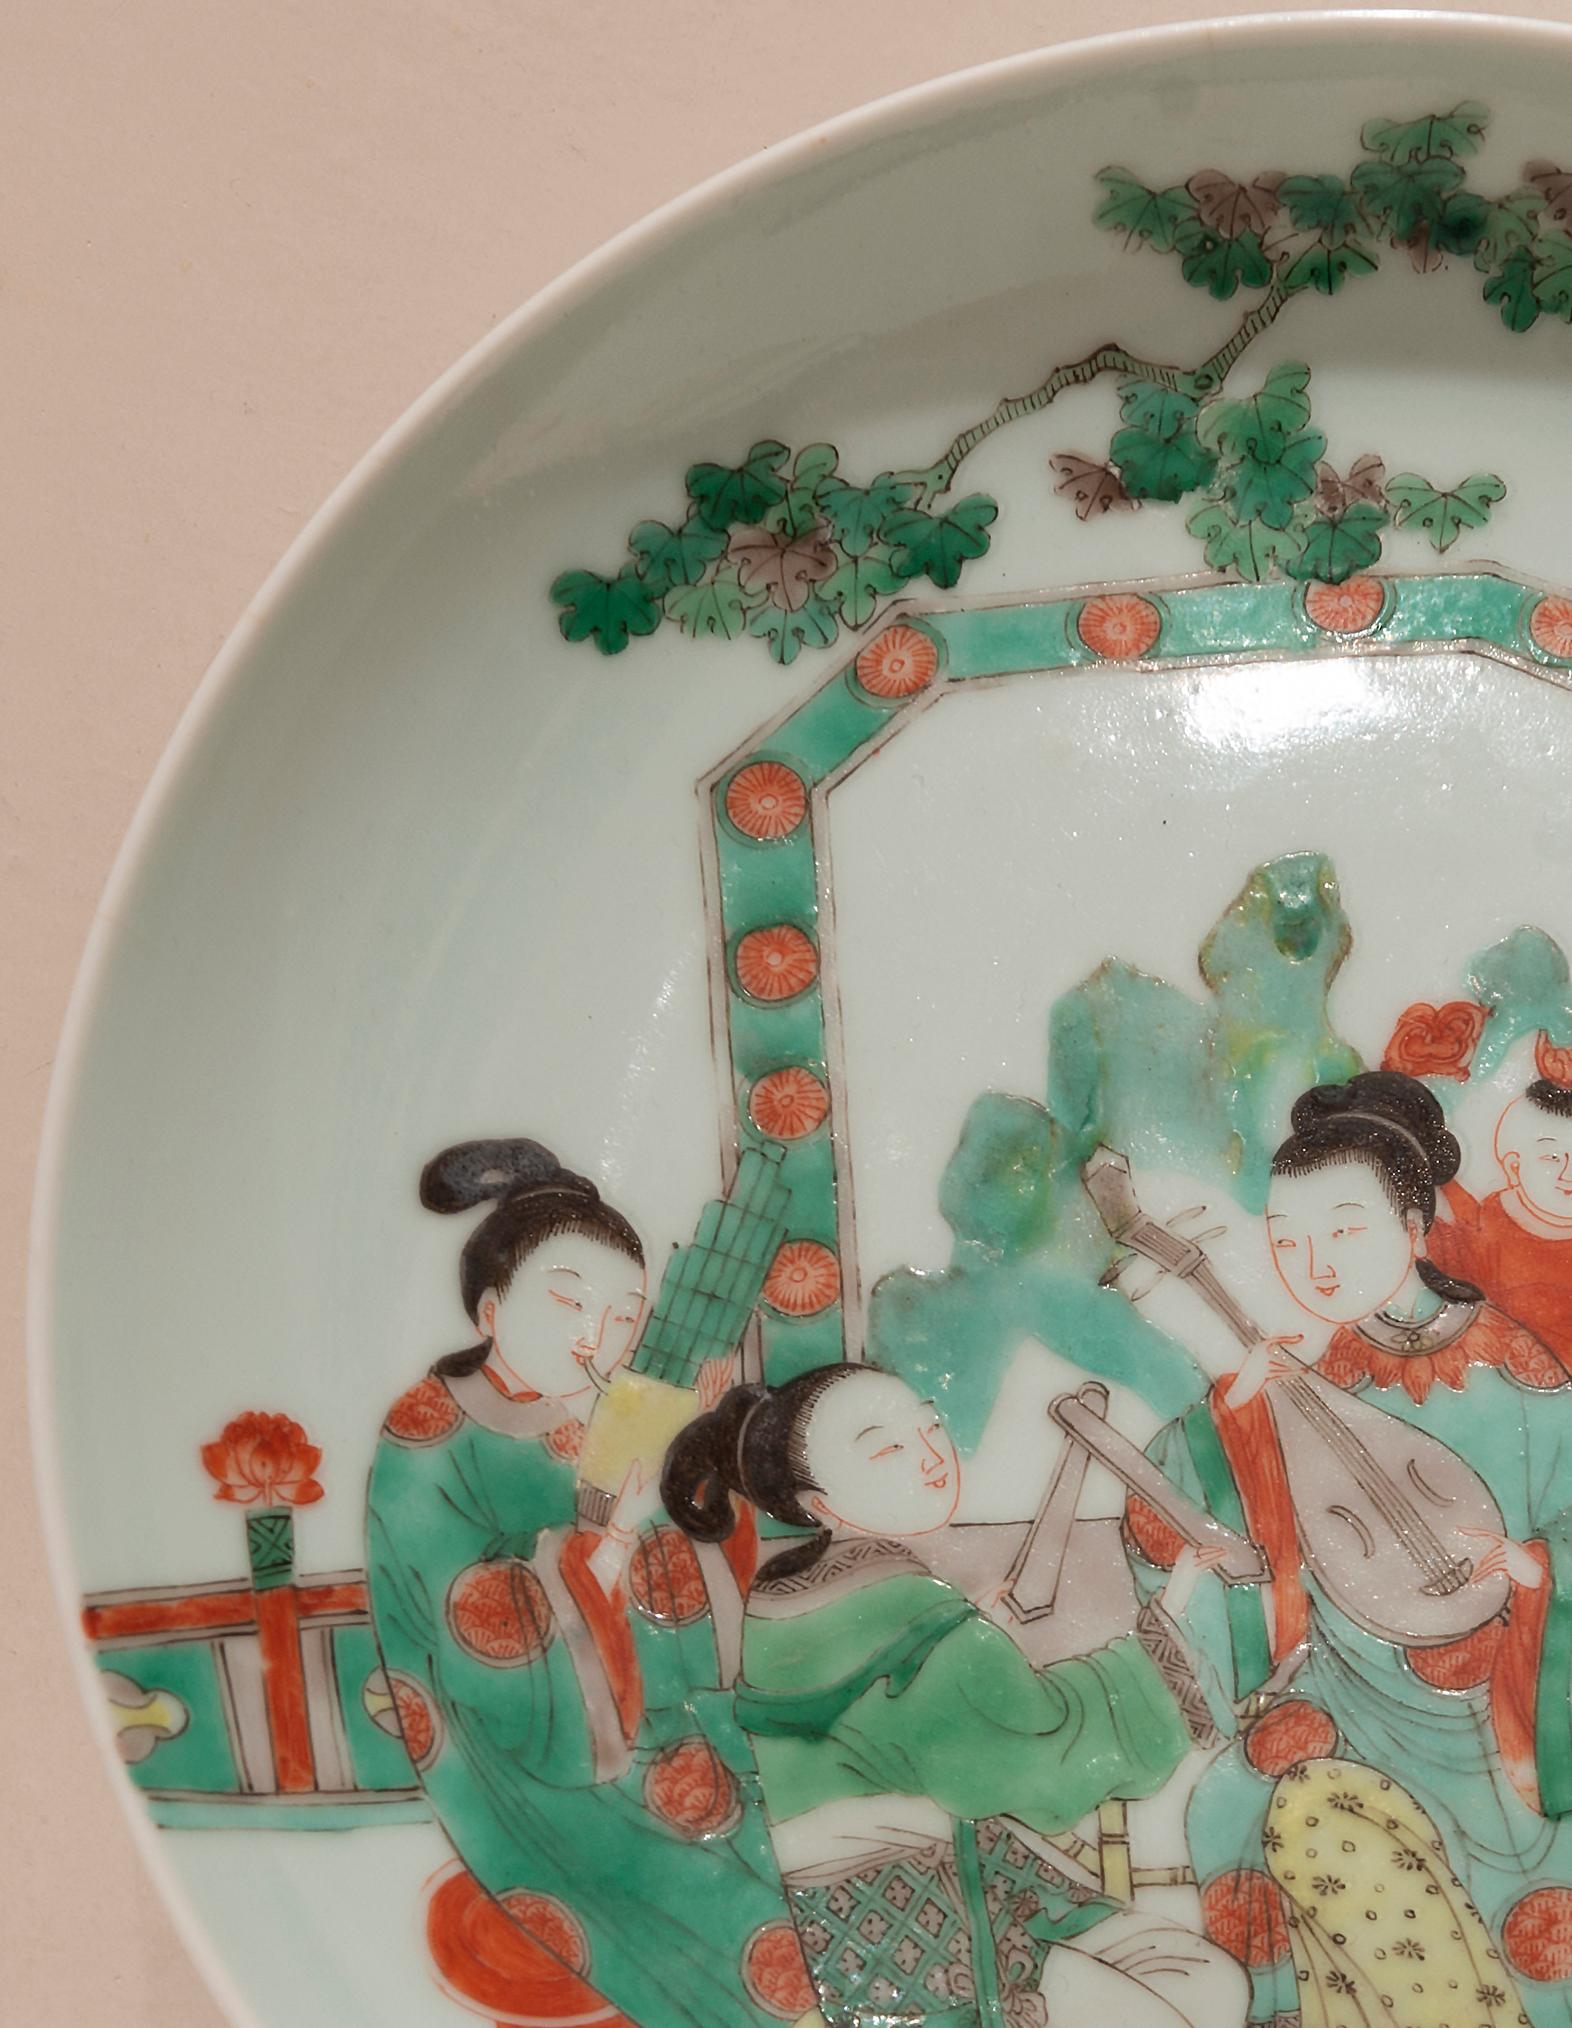 Porcelain dish depicting women playing music in a garden.